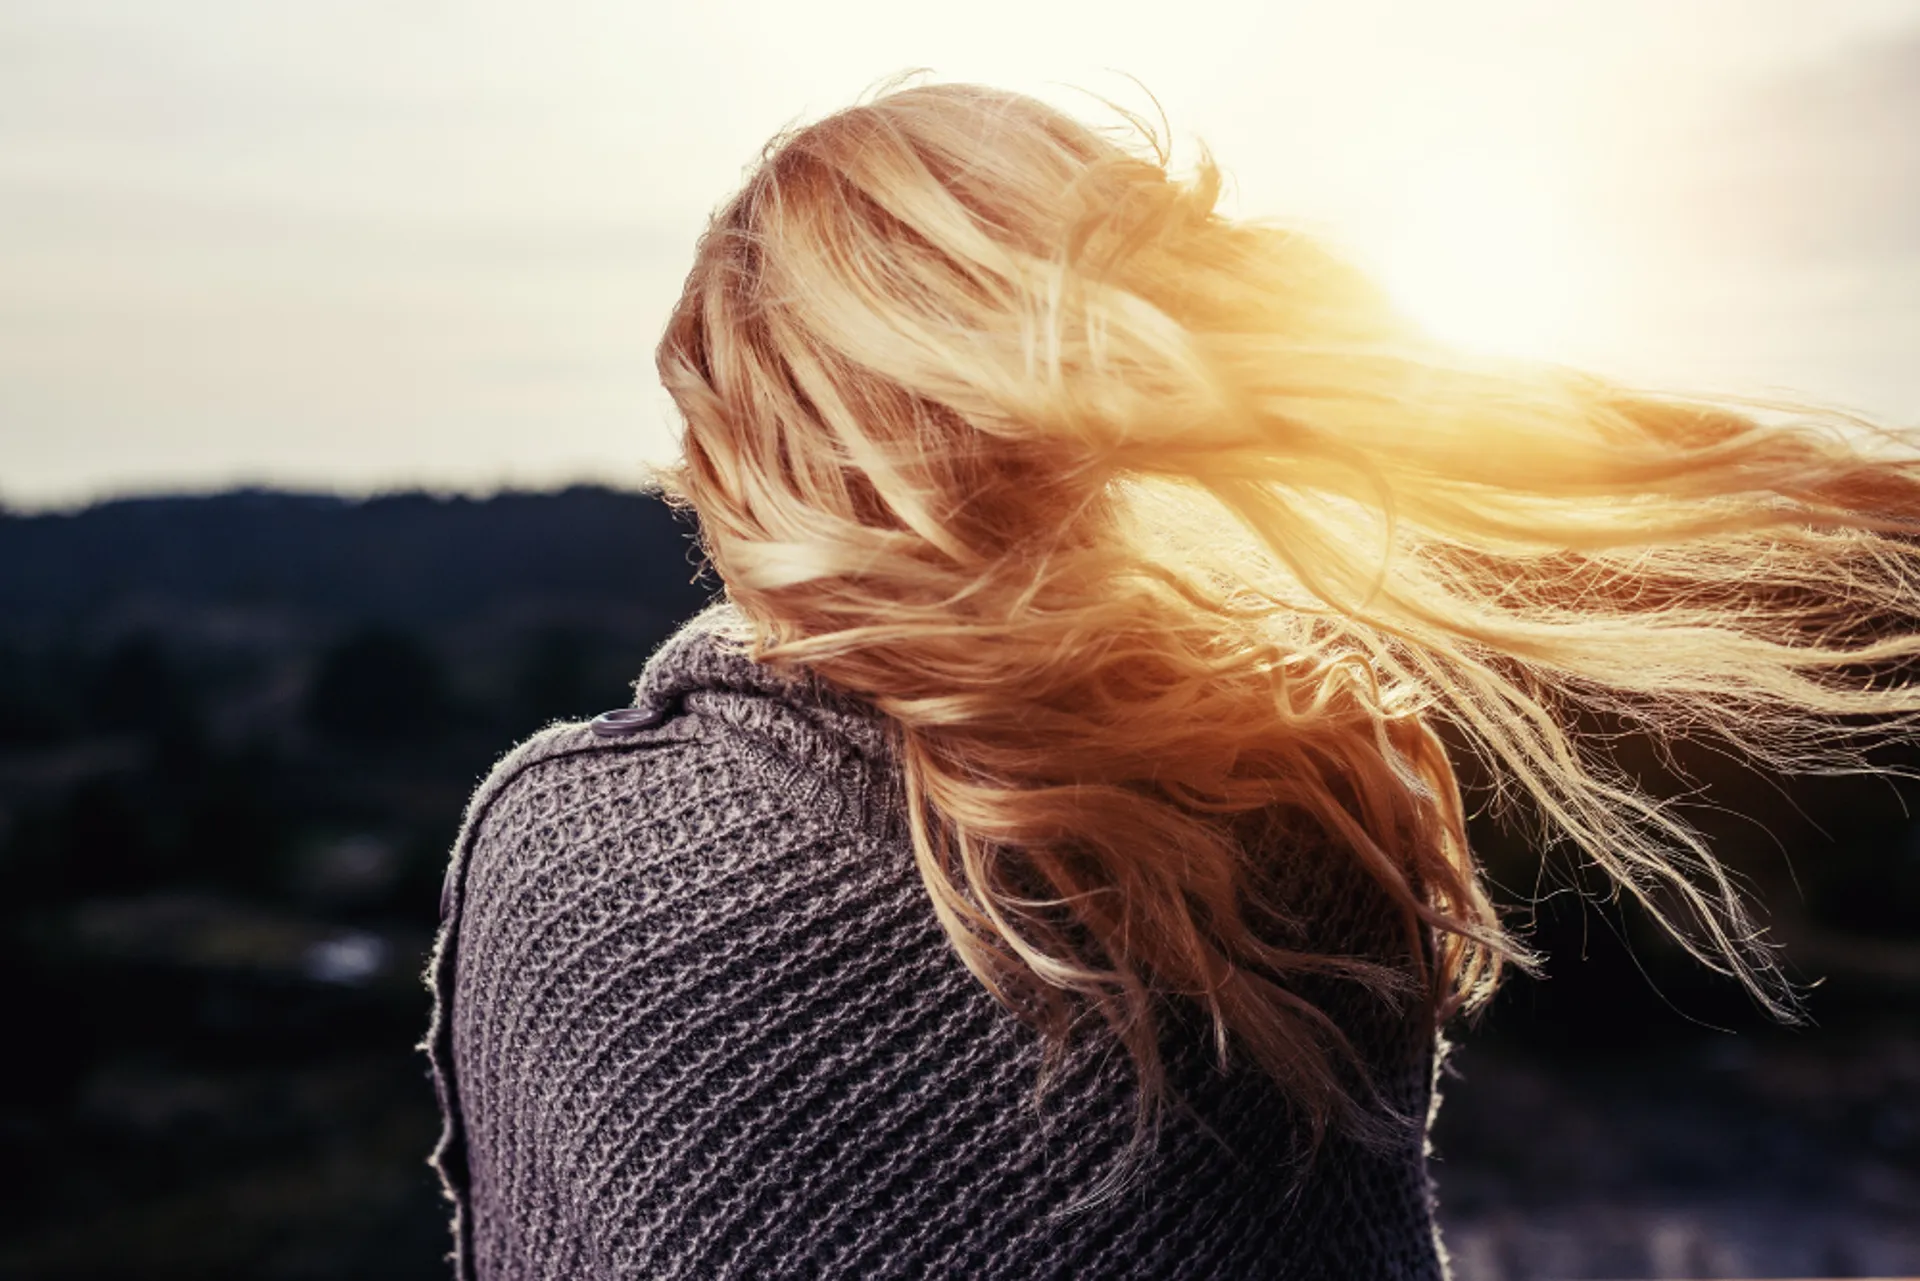 7 Cara Mudah Mengatasi Masalah Rambut Bercabang